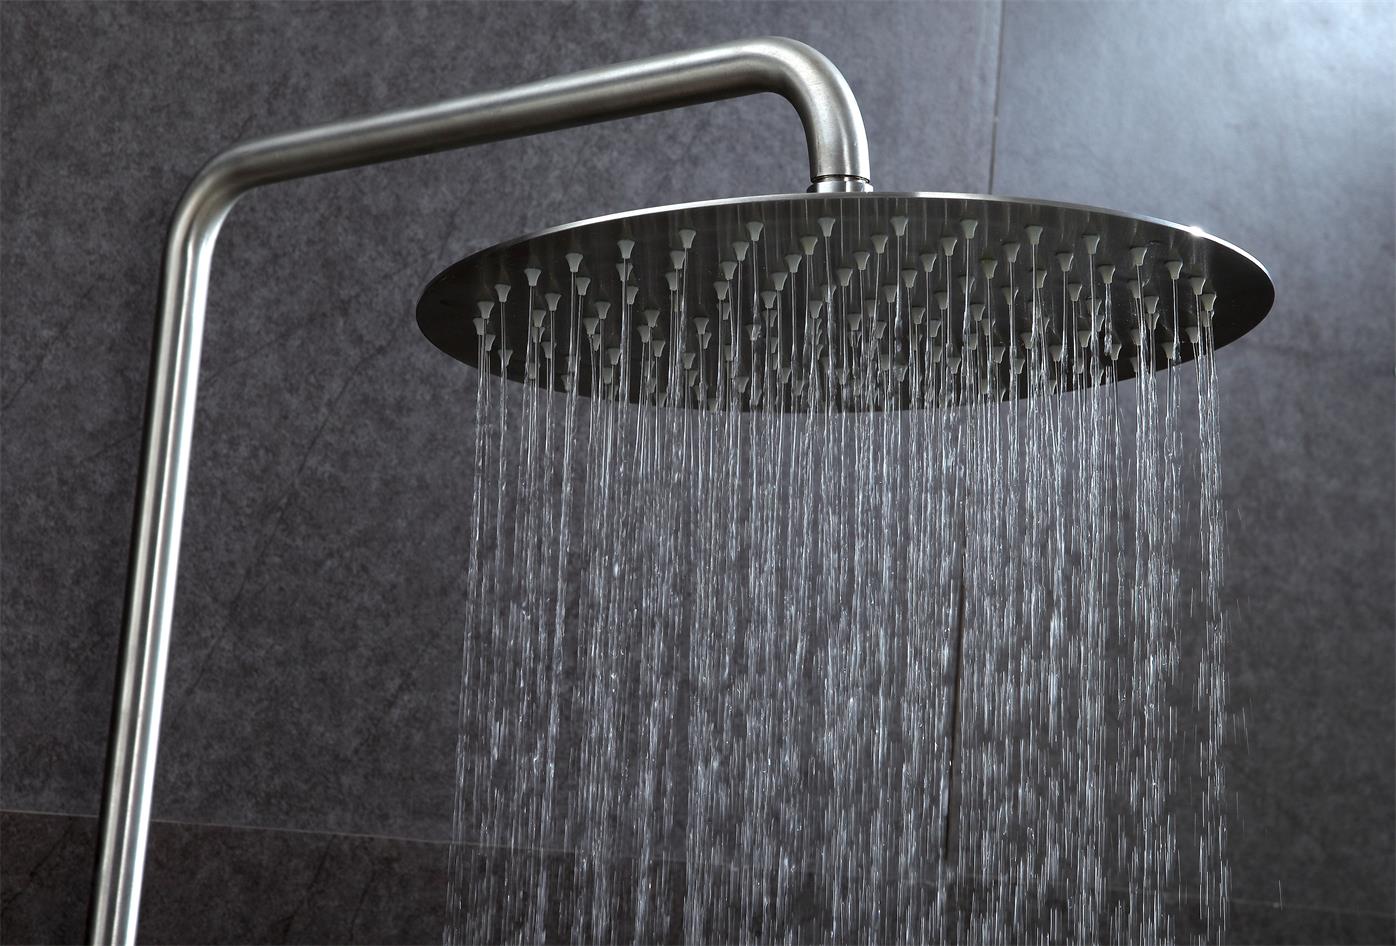 Com triar la barra de dutxa iònica?